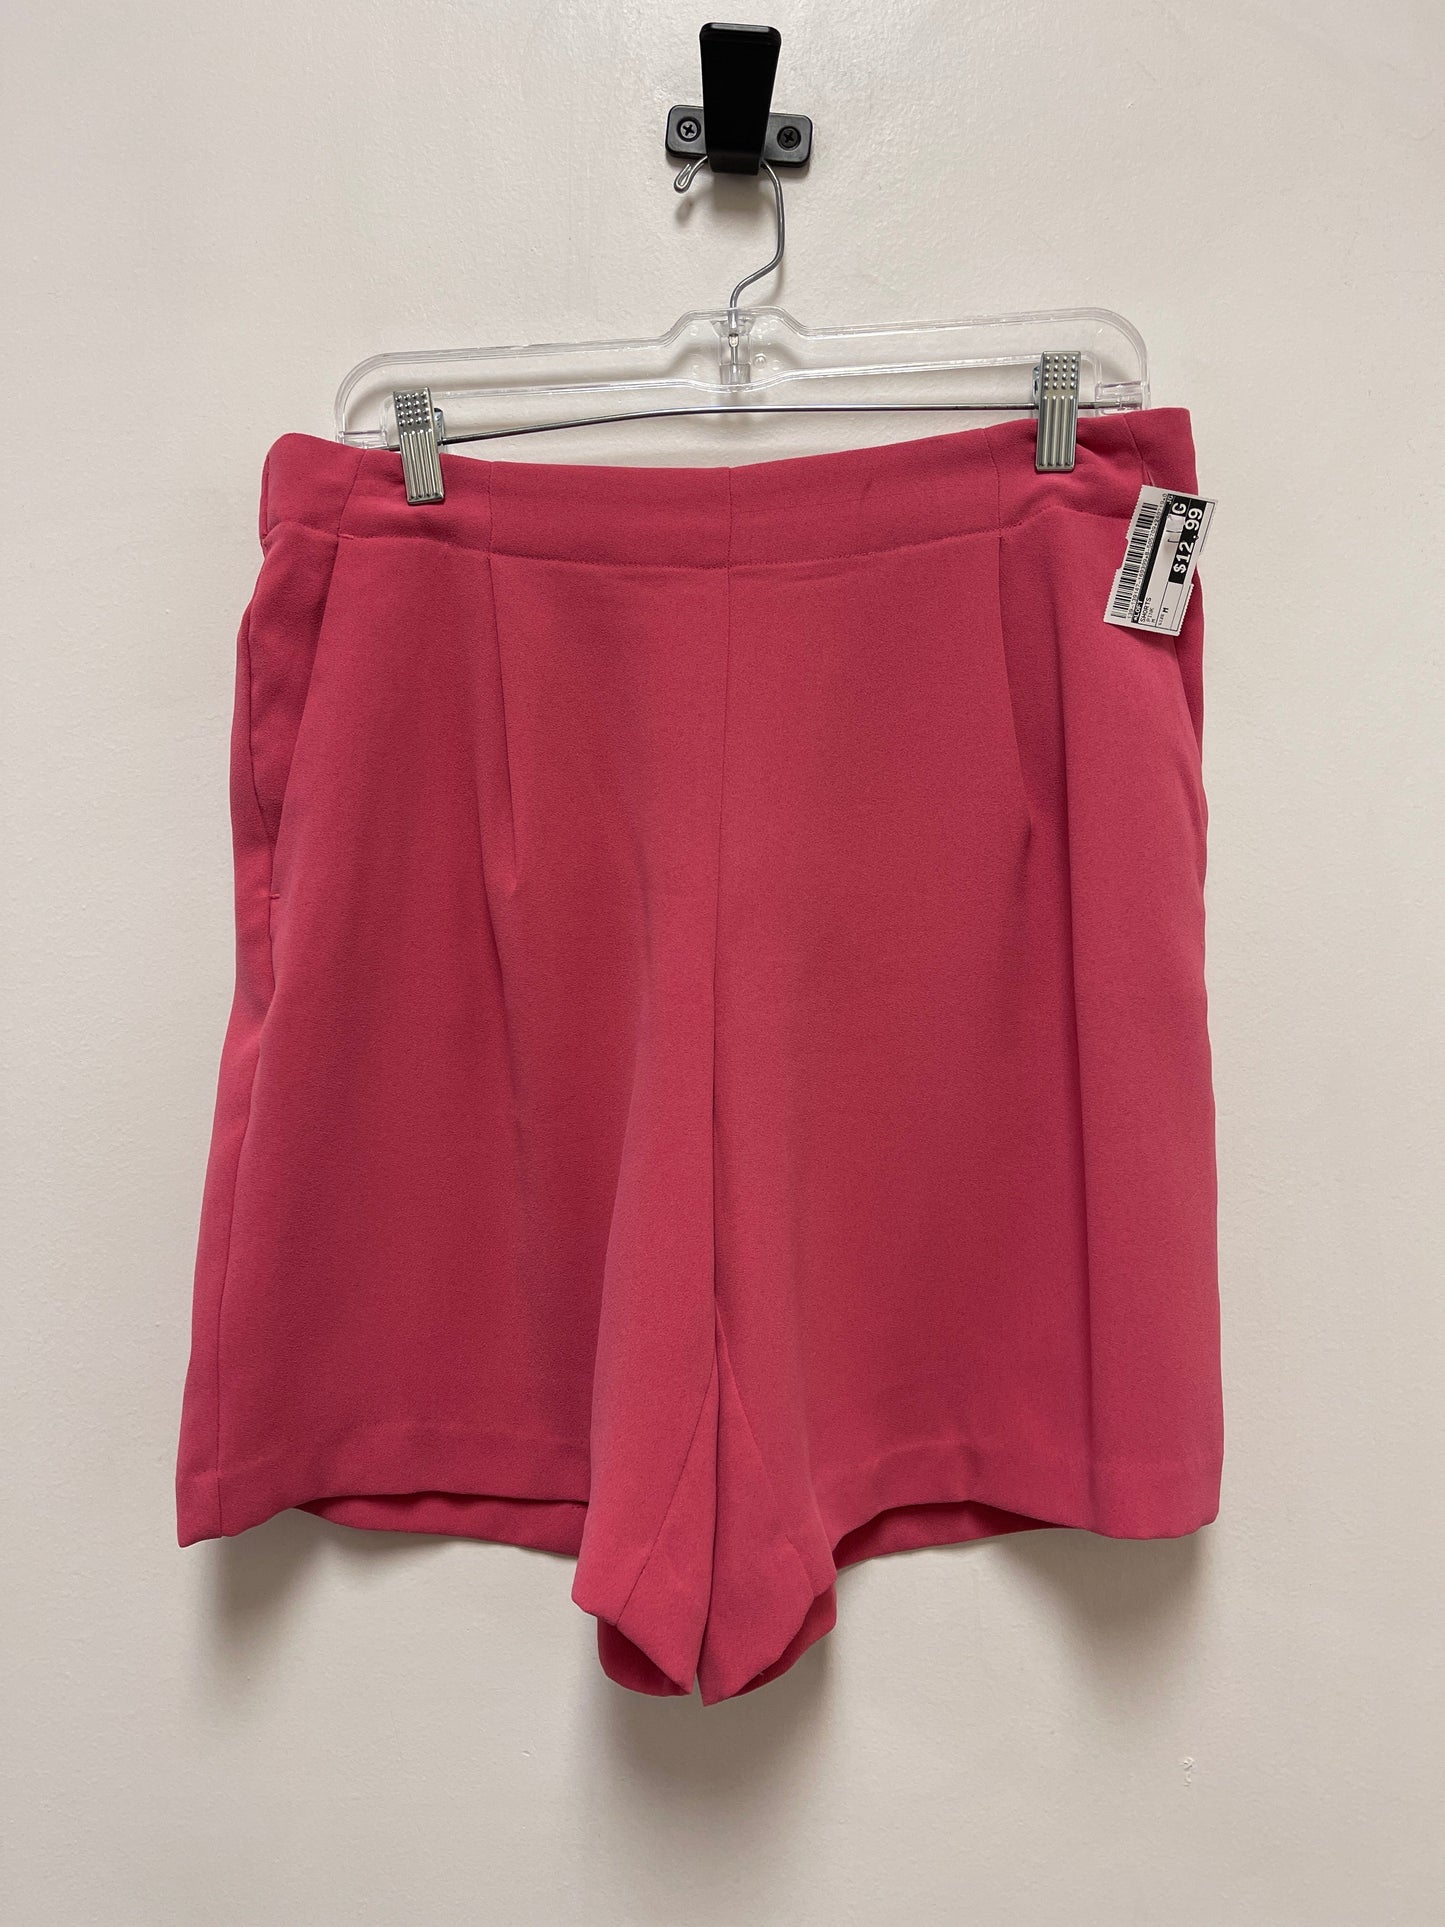 Pink Shorts Loft, Size M